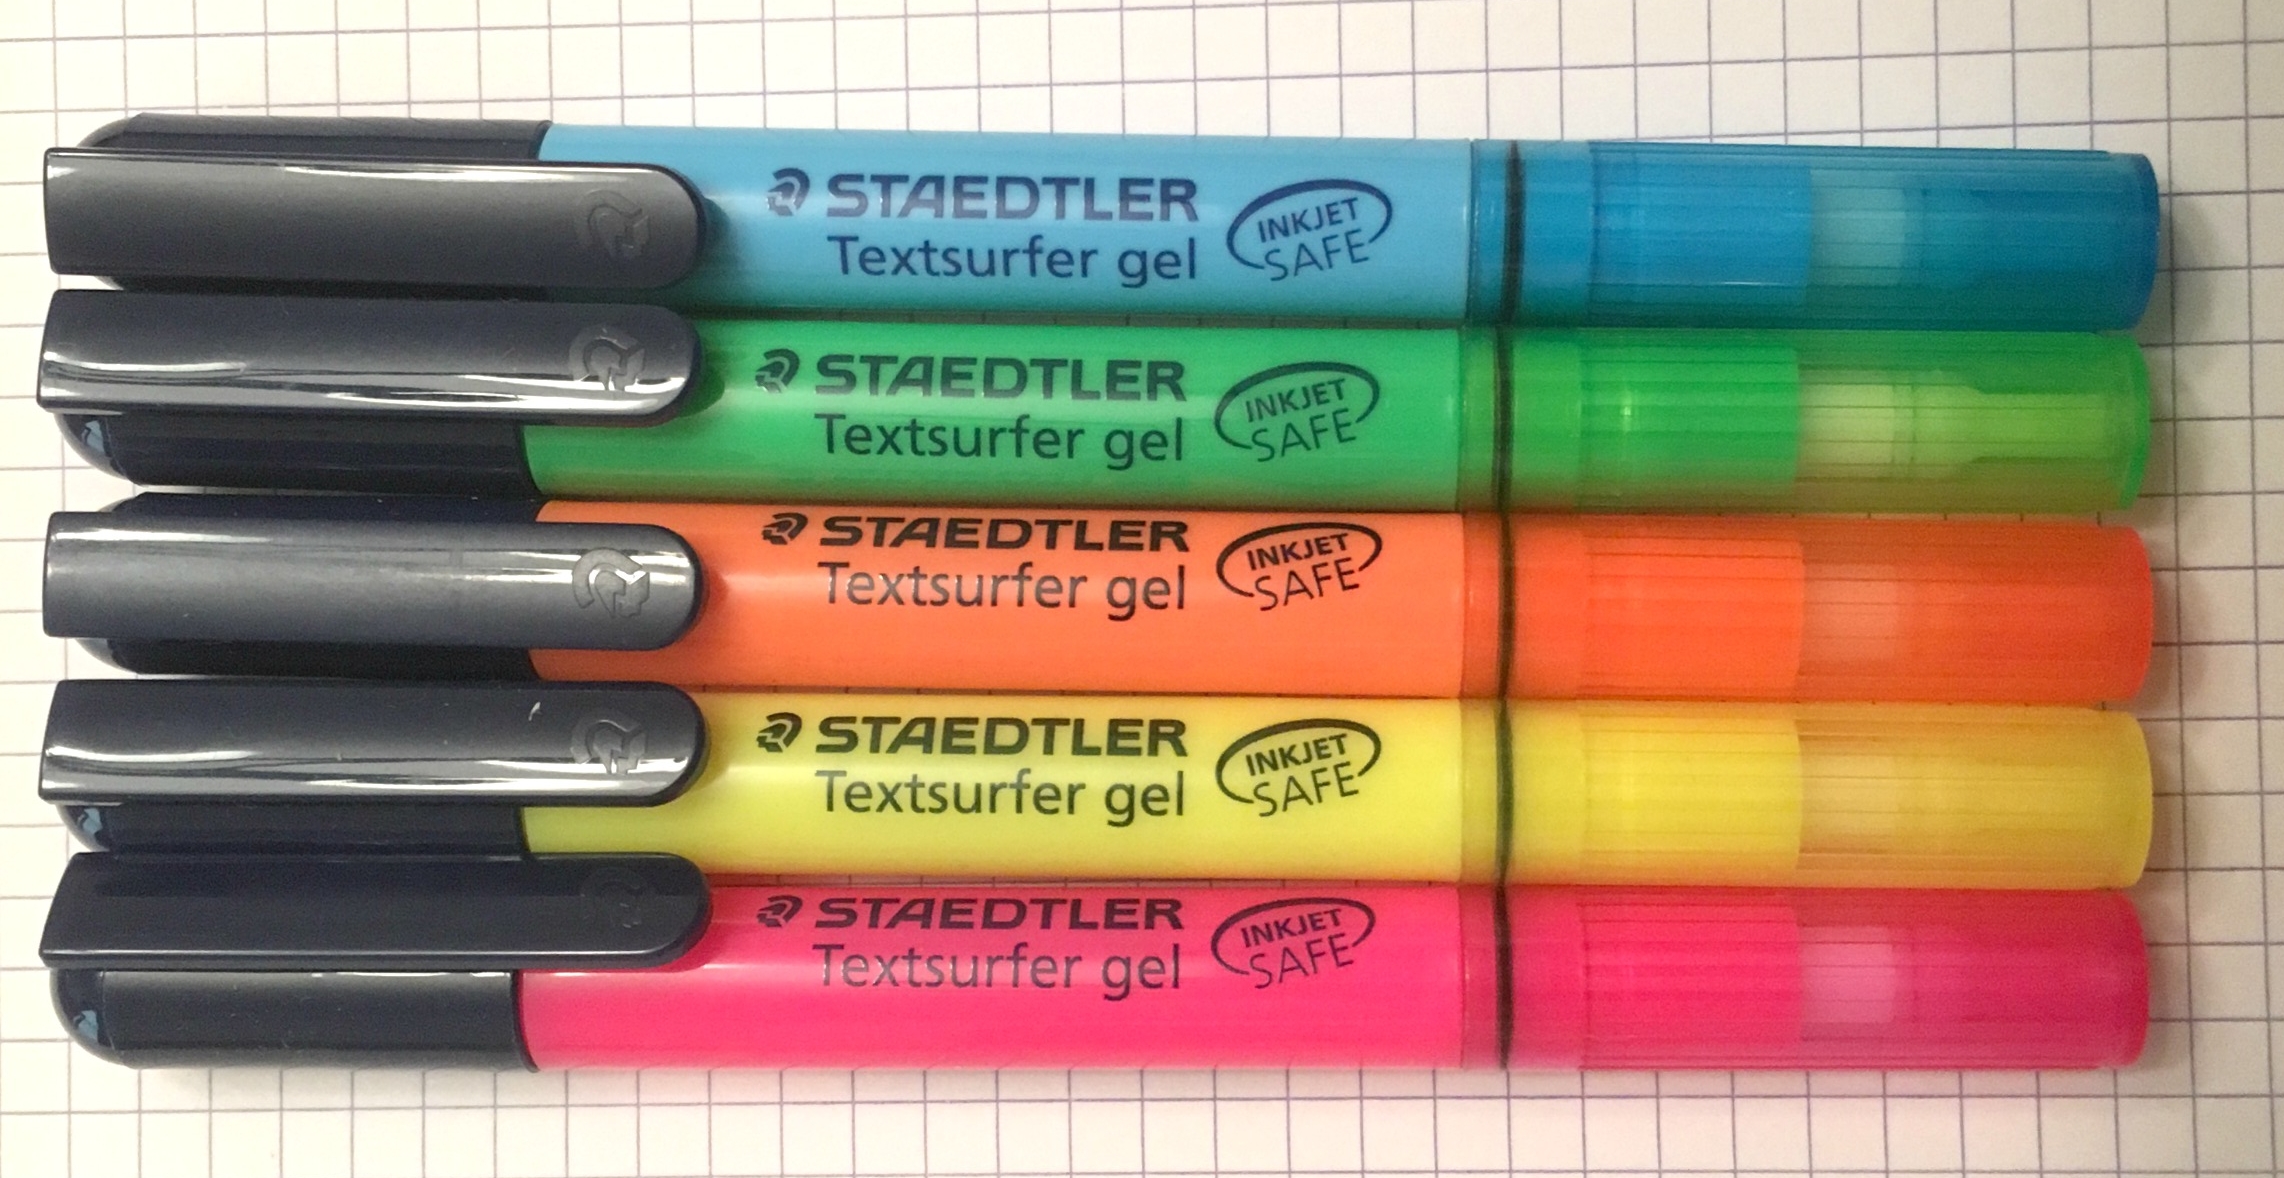 Staedtler Textsurfer Gel Highlighter Review — The Pen Addict